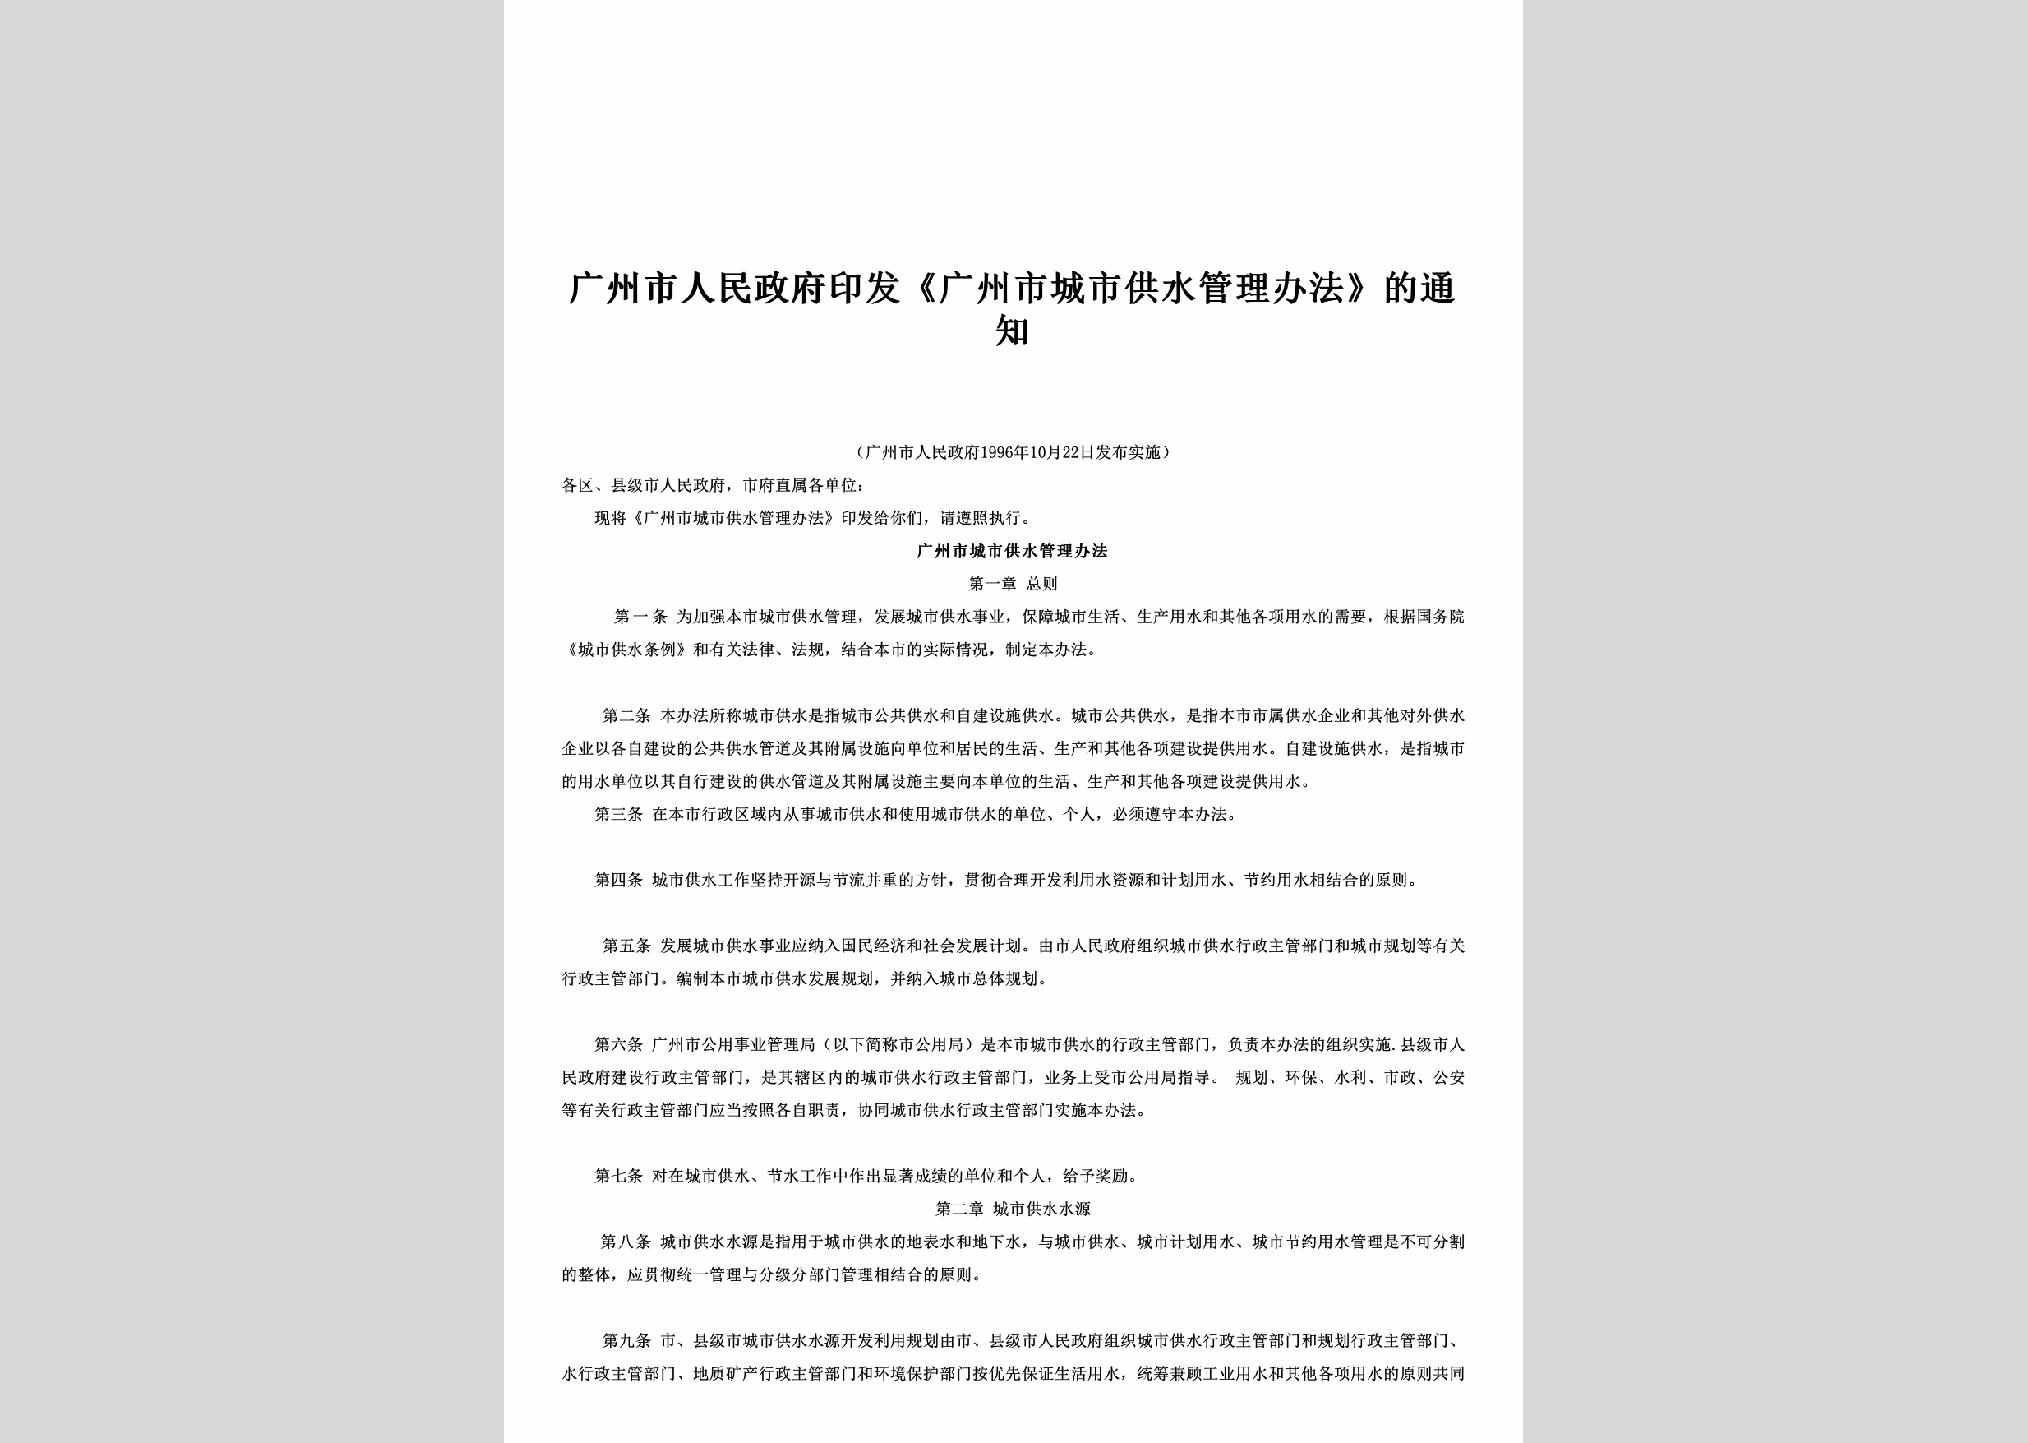 GD-CSGSGLBF-1996：印发《广州市城市供水管理办法》的通知